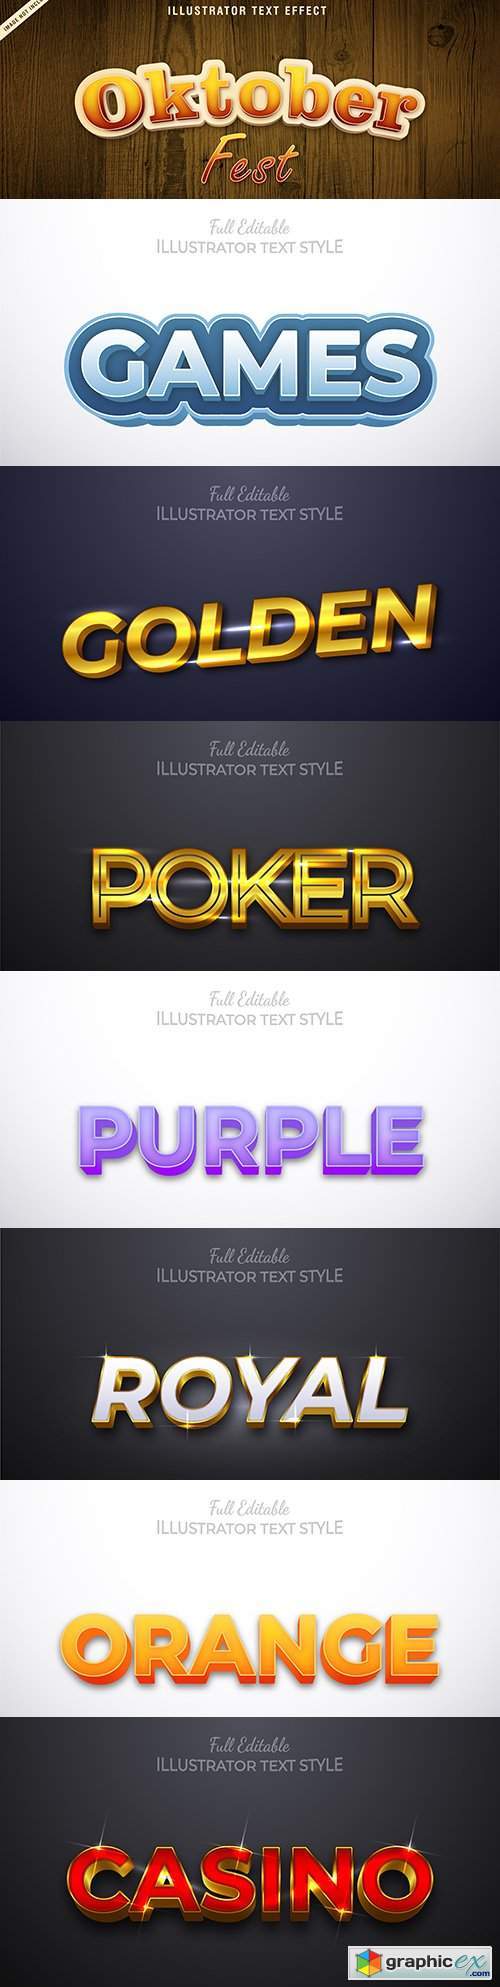 Editable font effect text collection illustration design 201